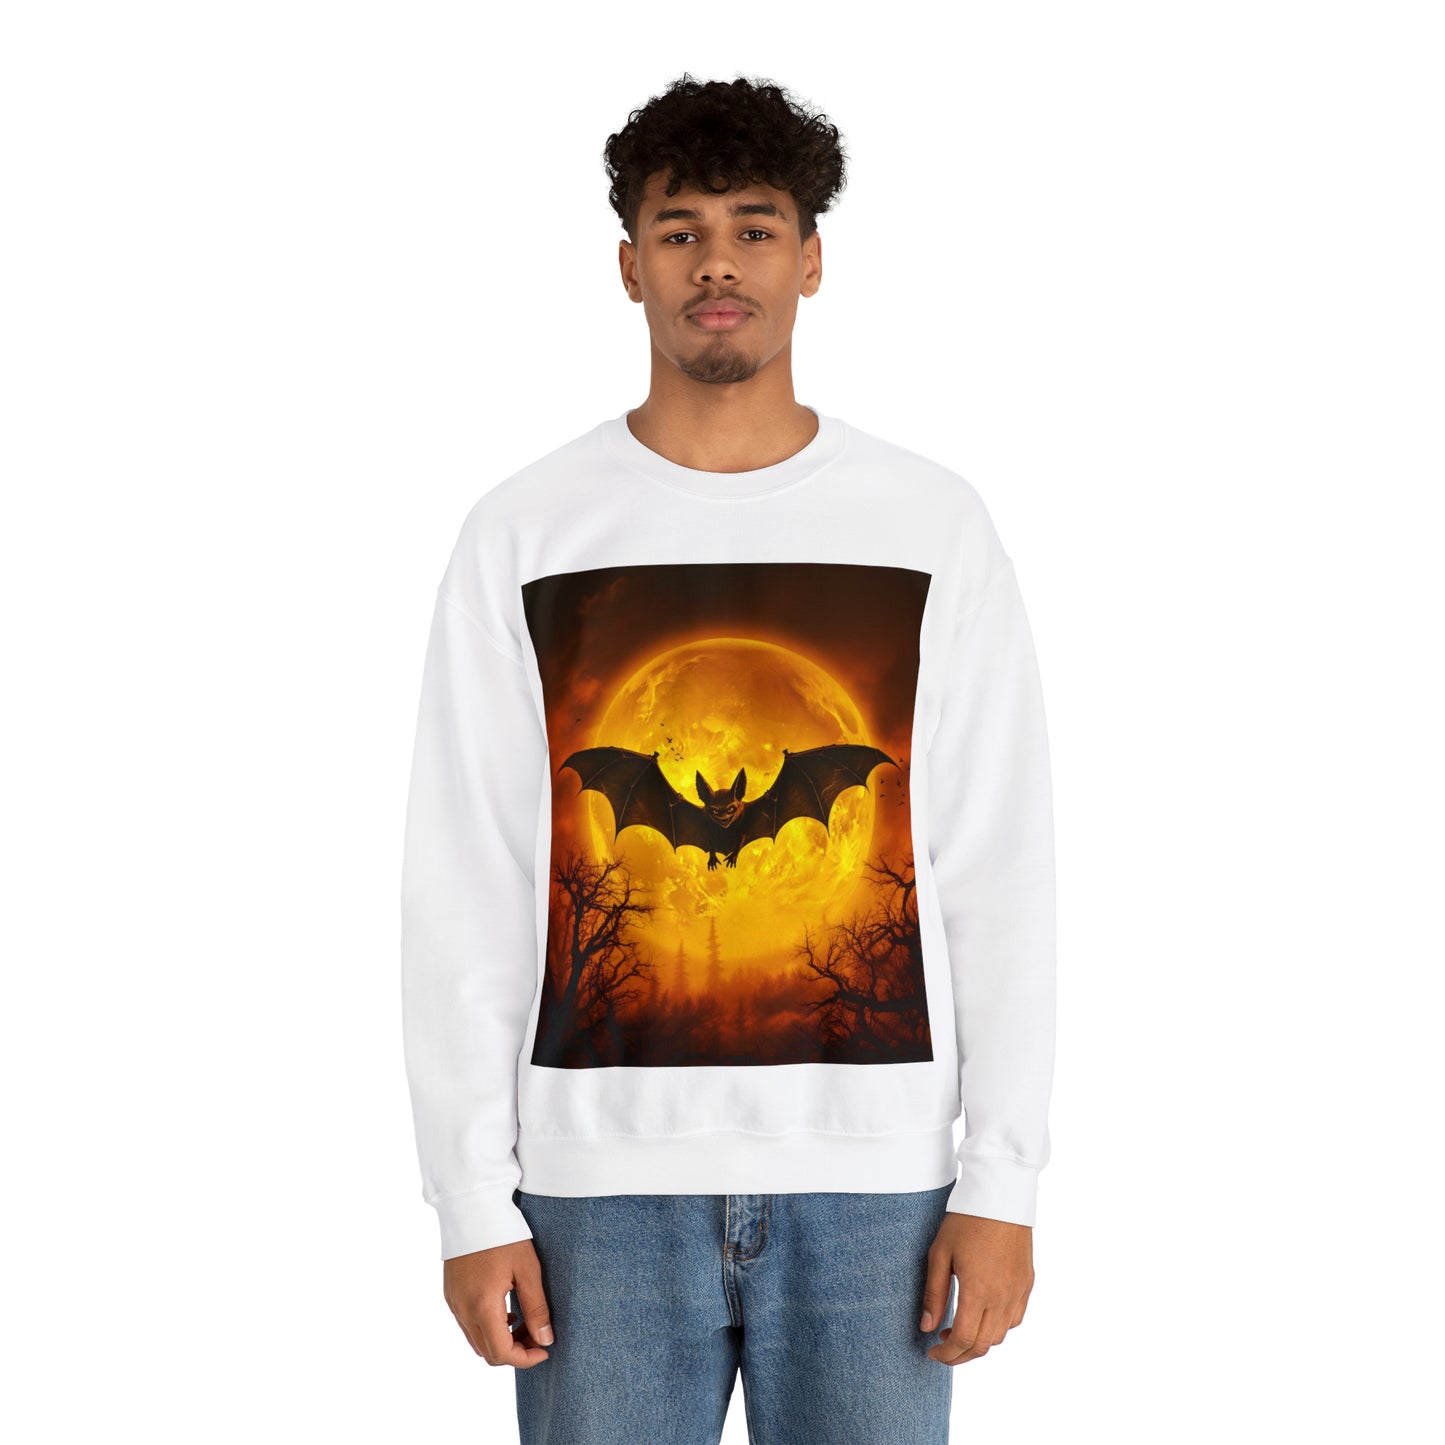 Bat Halloween Sweatshirt Men's Women's Black Grey White Small Medium Large XL XXL XXL Halloween Sweatshirts